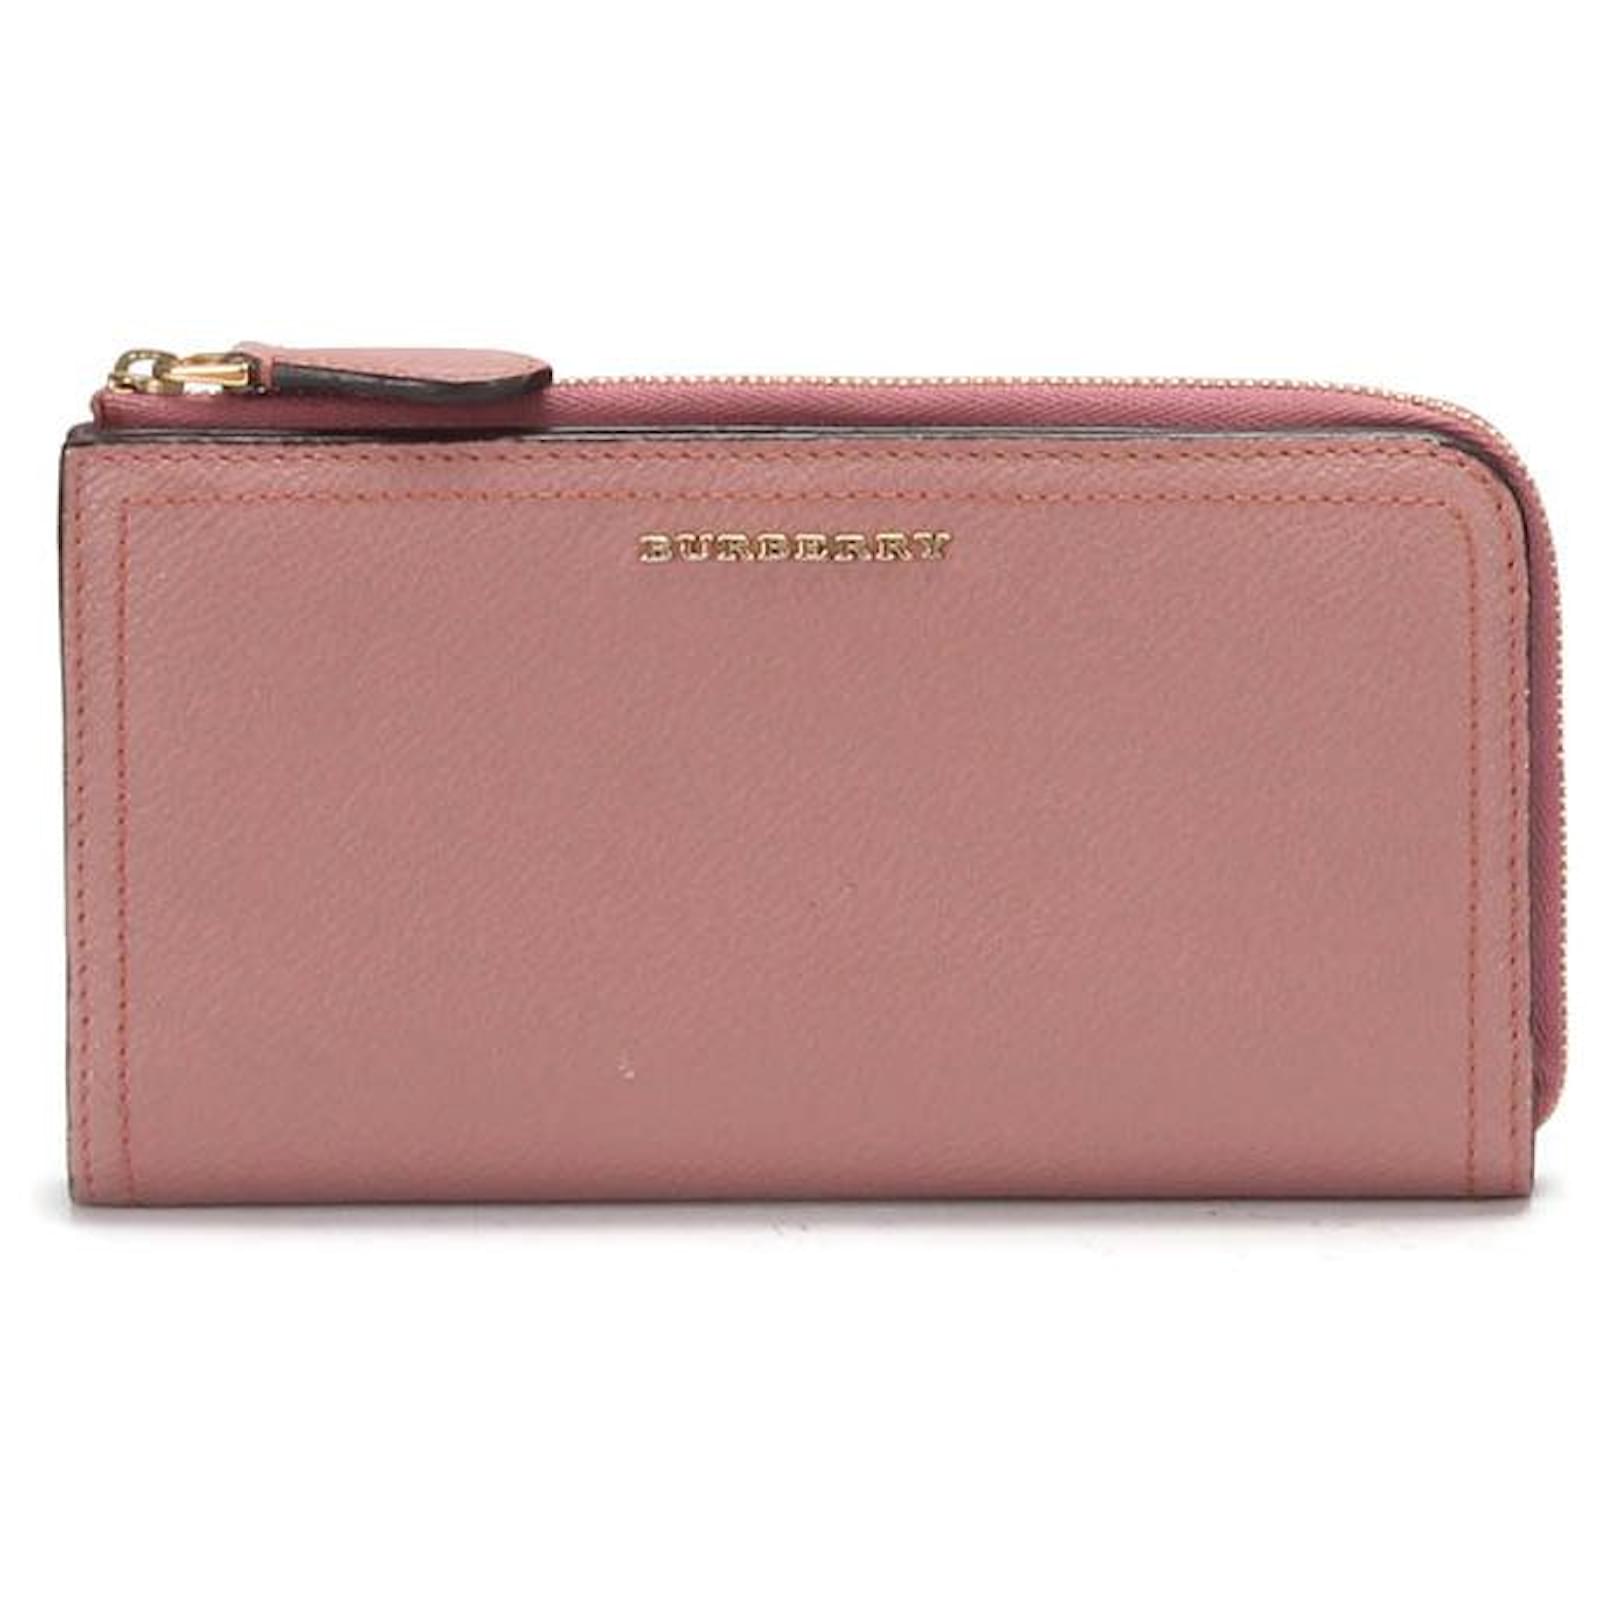 Burberry Pink wallet